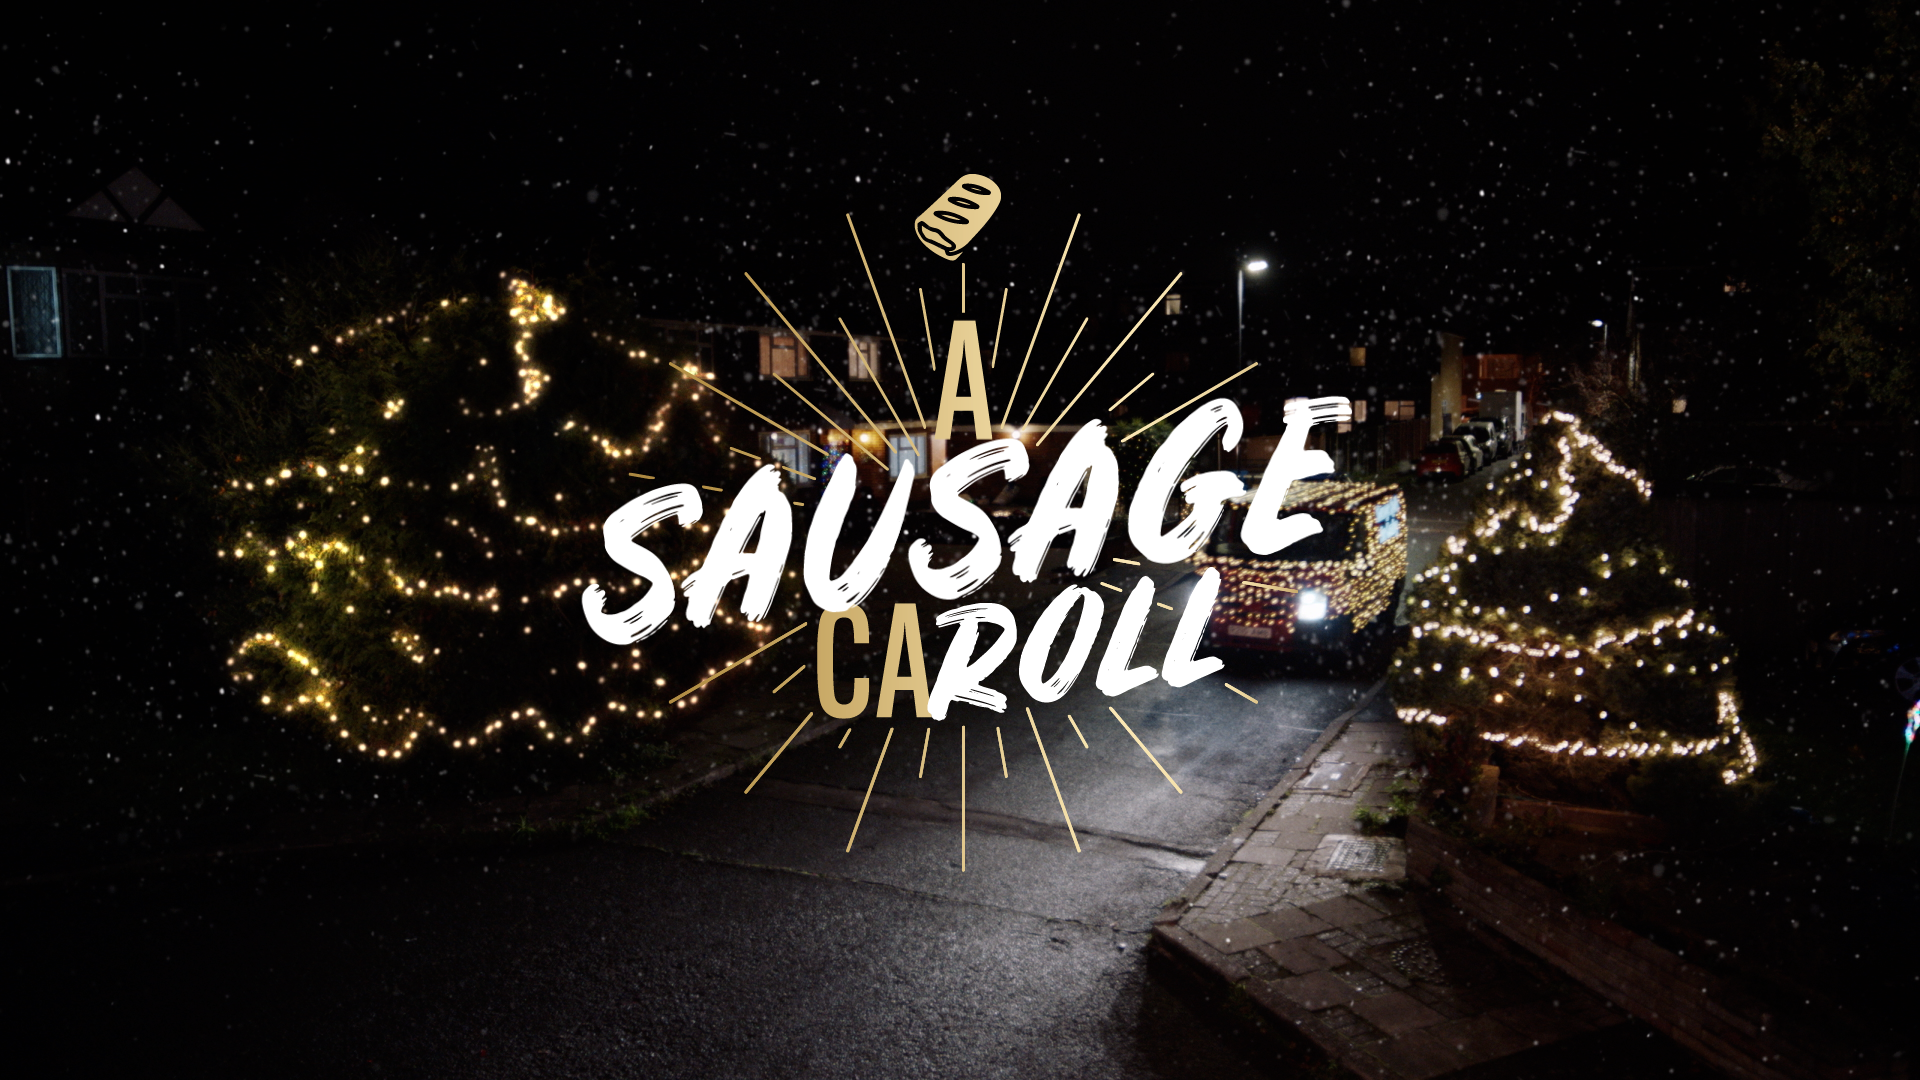 A Sausage CaRoll